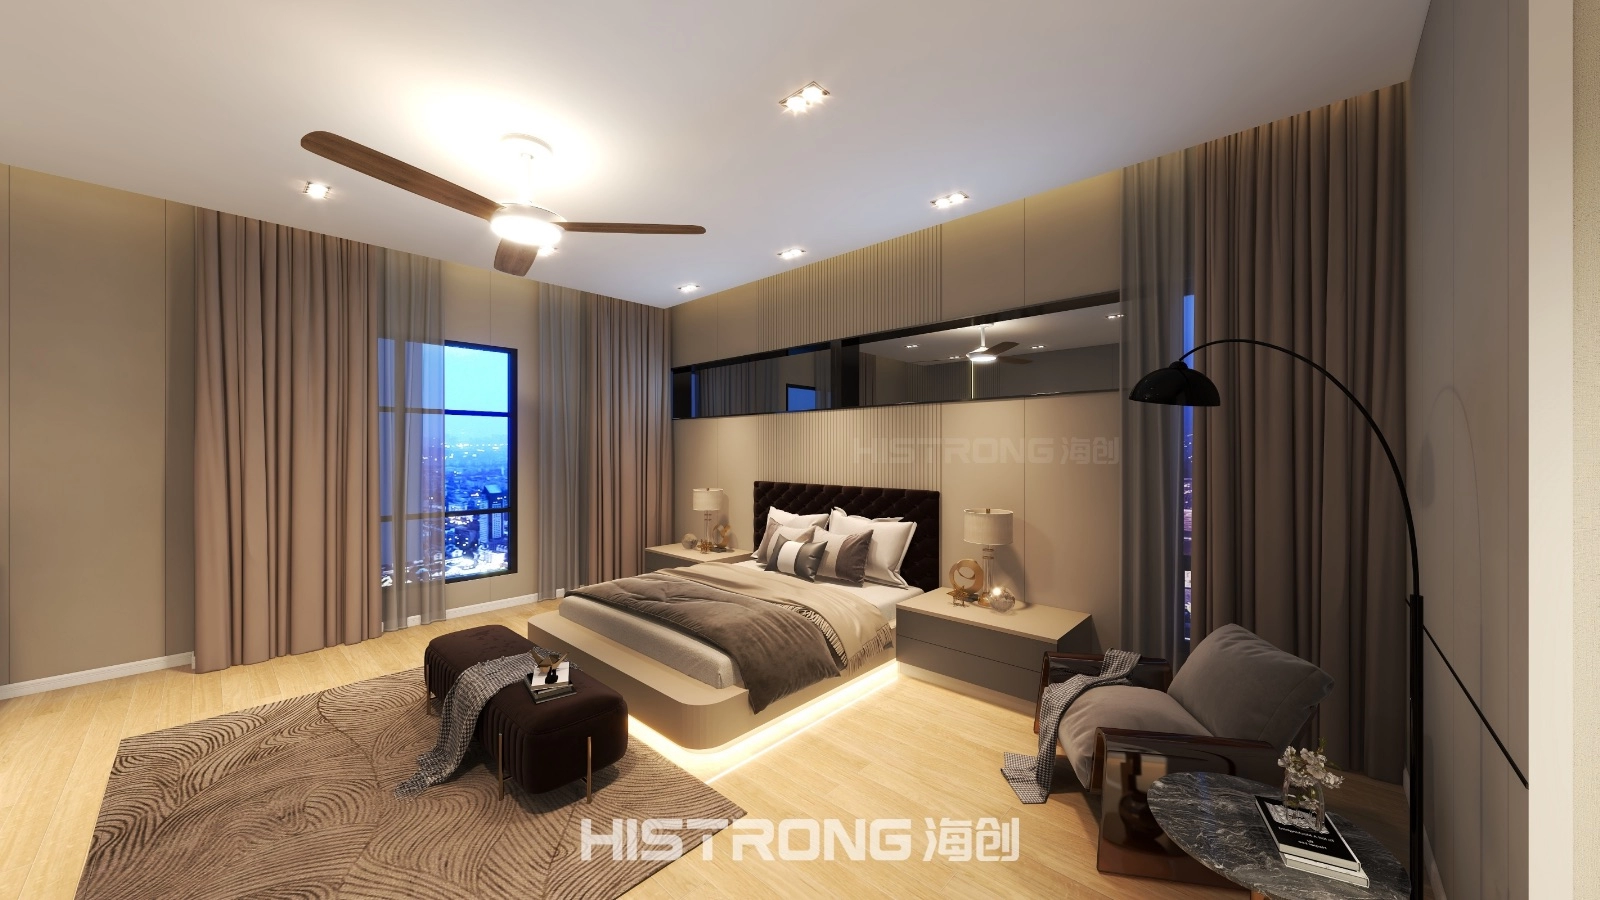 Bedroom, Bamboo Fibre Panel Wall, Aluminium Inlay, Bamboo Fibre Ceiling, Mirror Feature Wall, Cabinetry